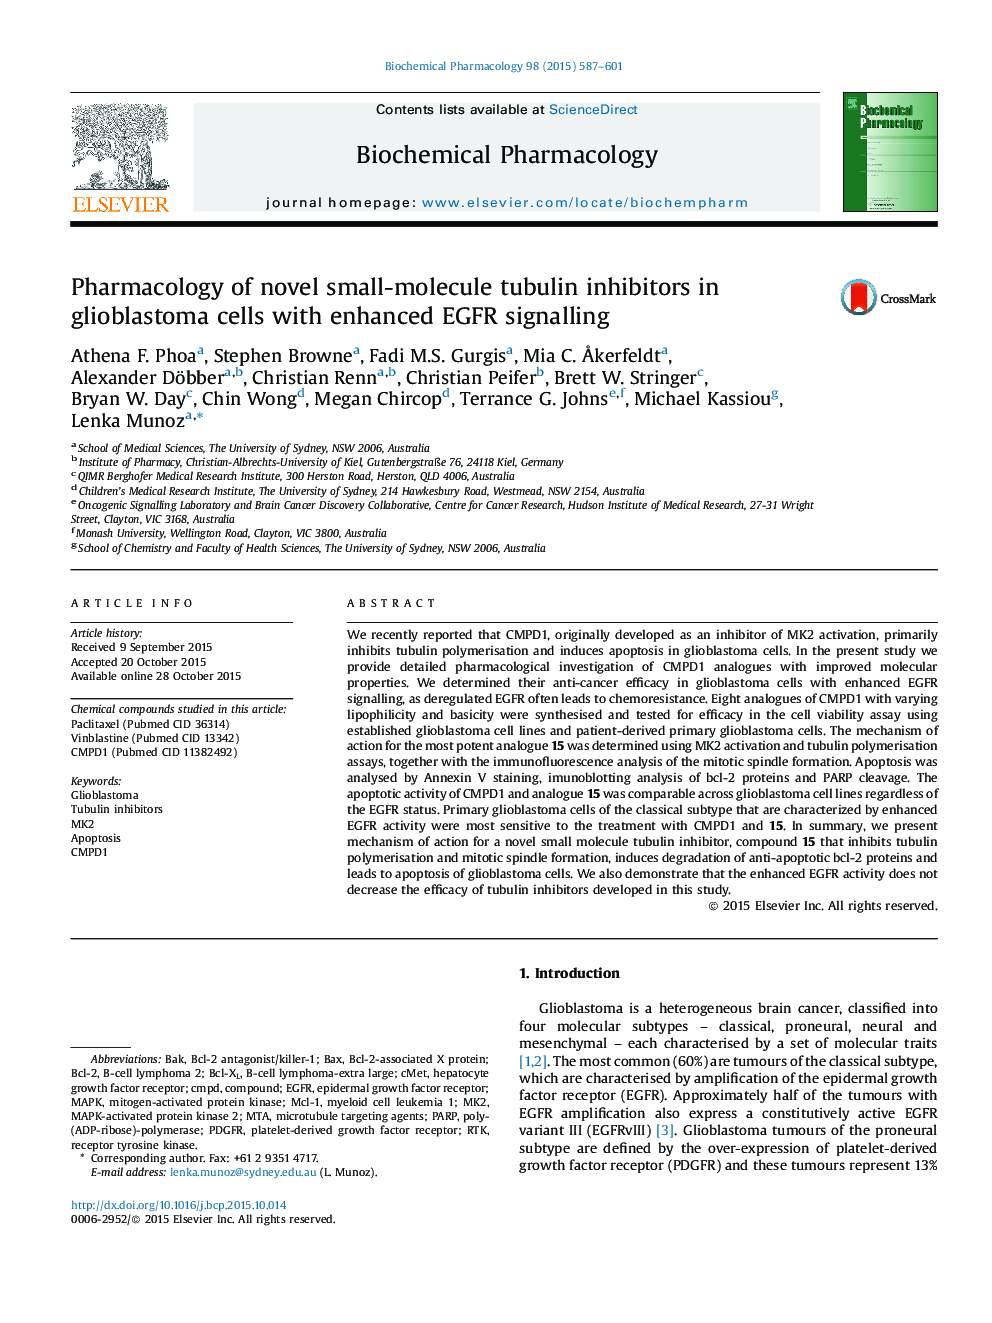 Pharmacology of novel small-molecule tubulin inhibitors in glioblastoma cells with enhanced EGFR signalling